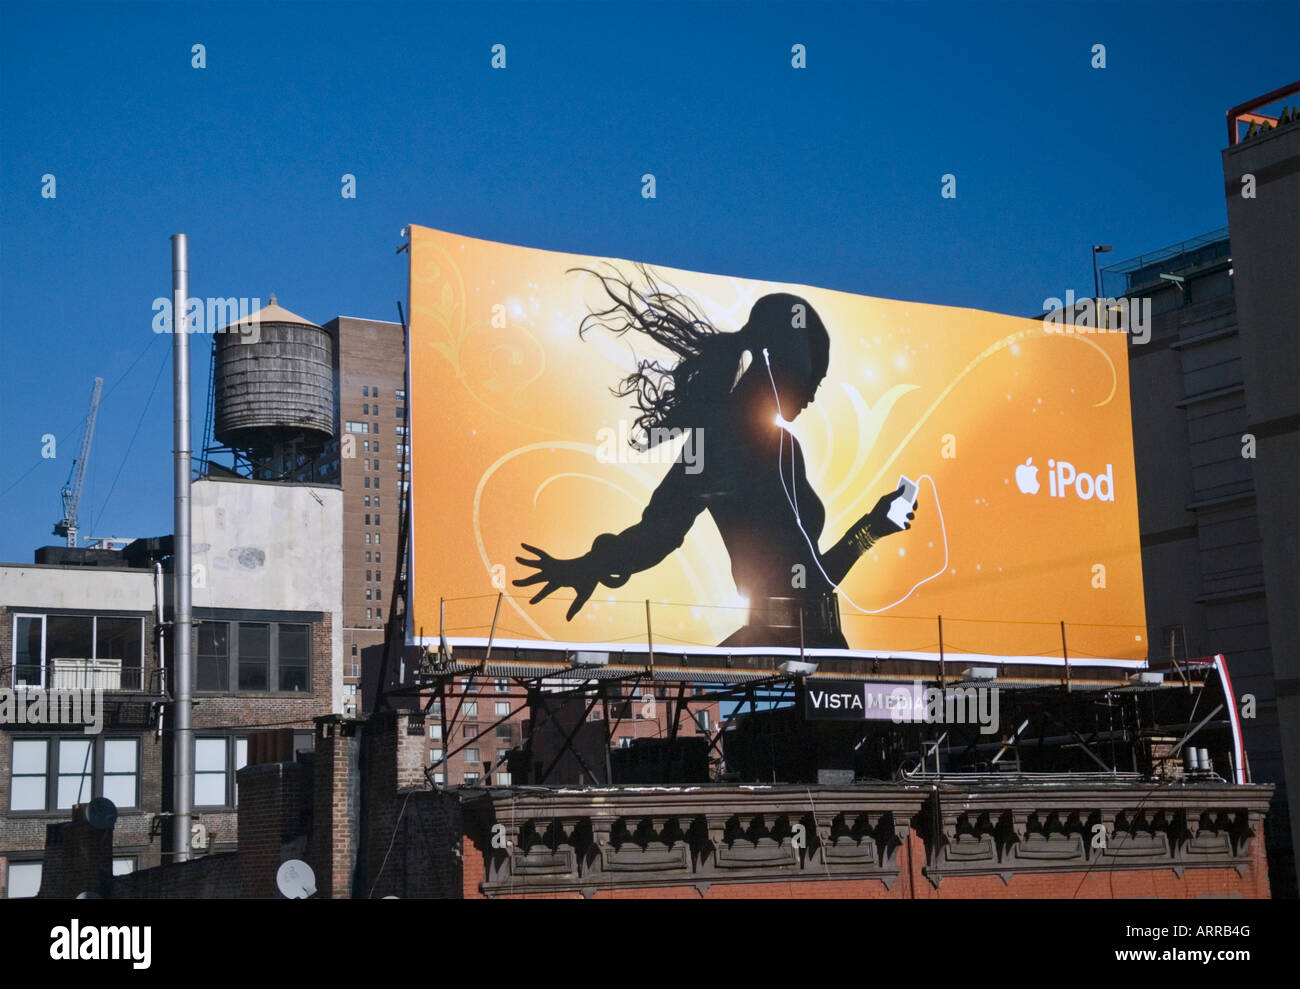 Billboard Advertisement for iPod Stock Photo